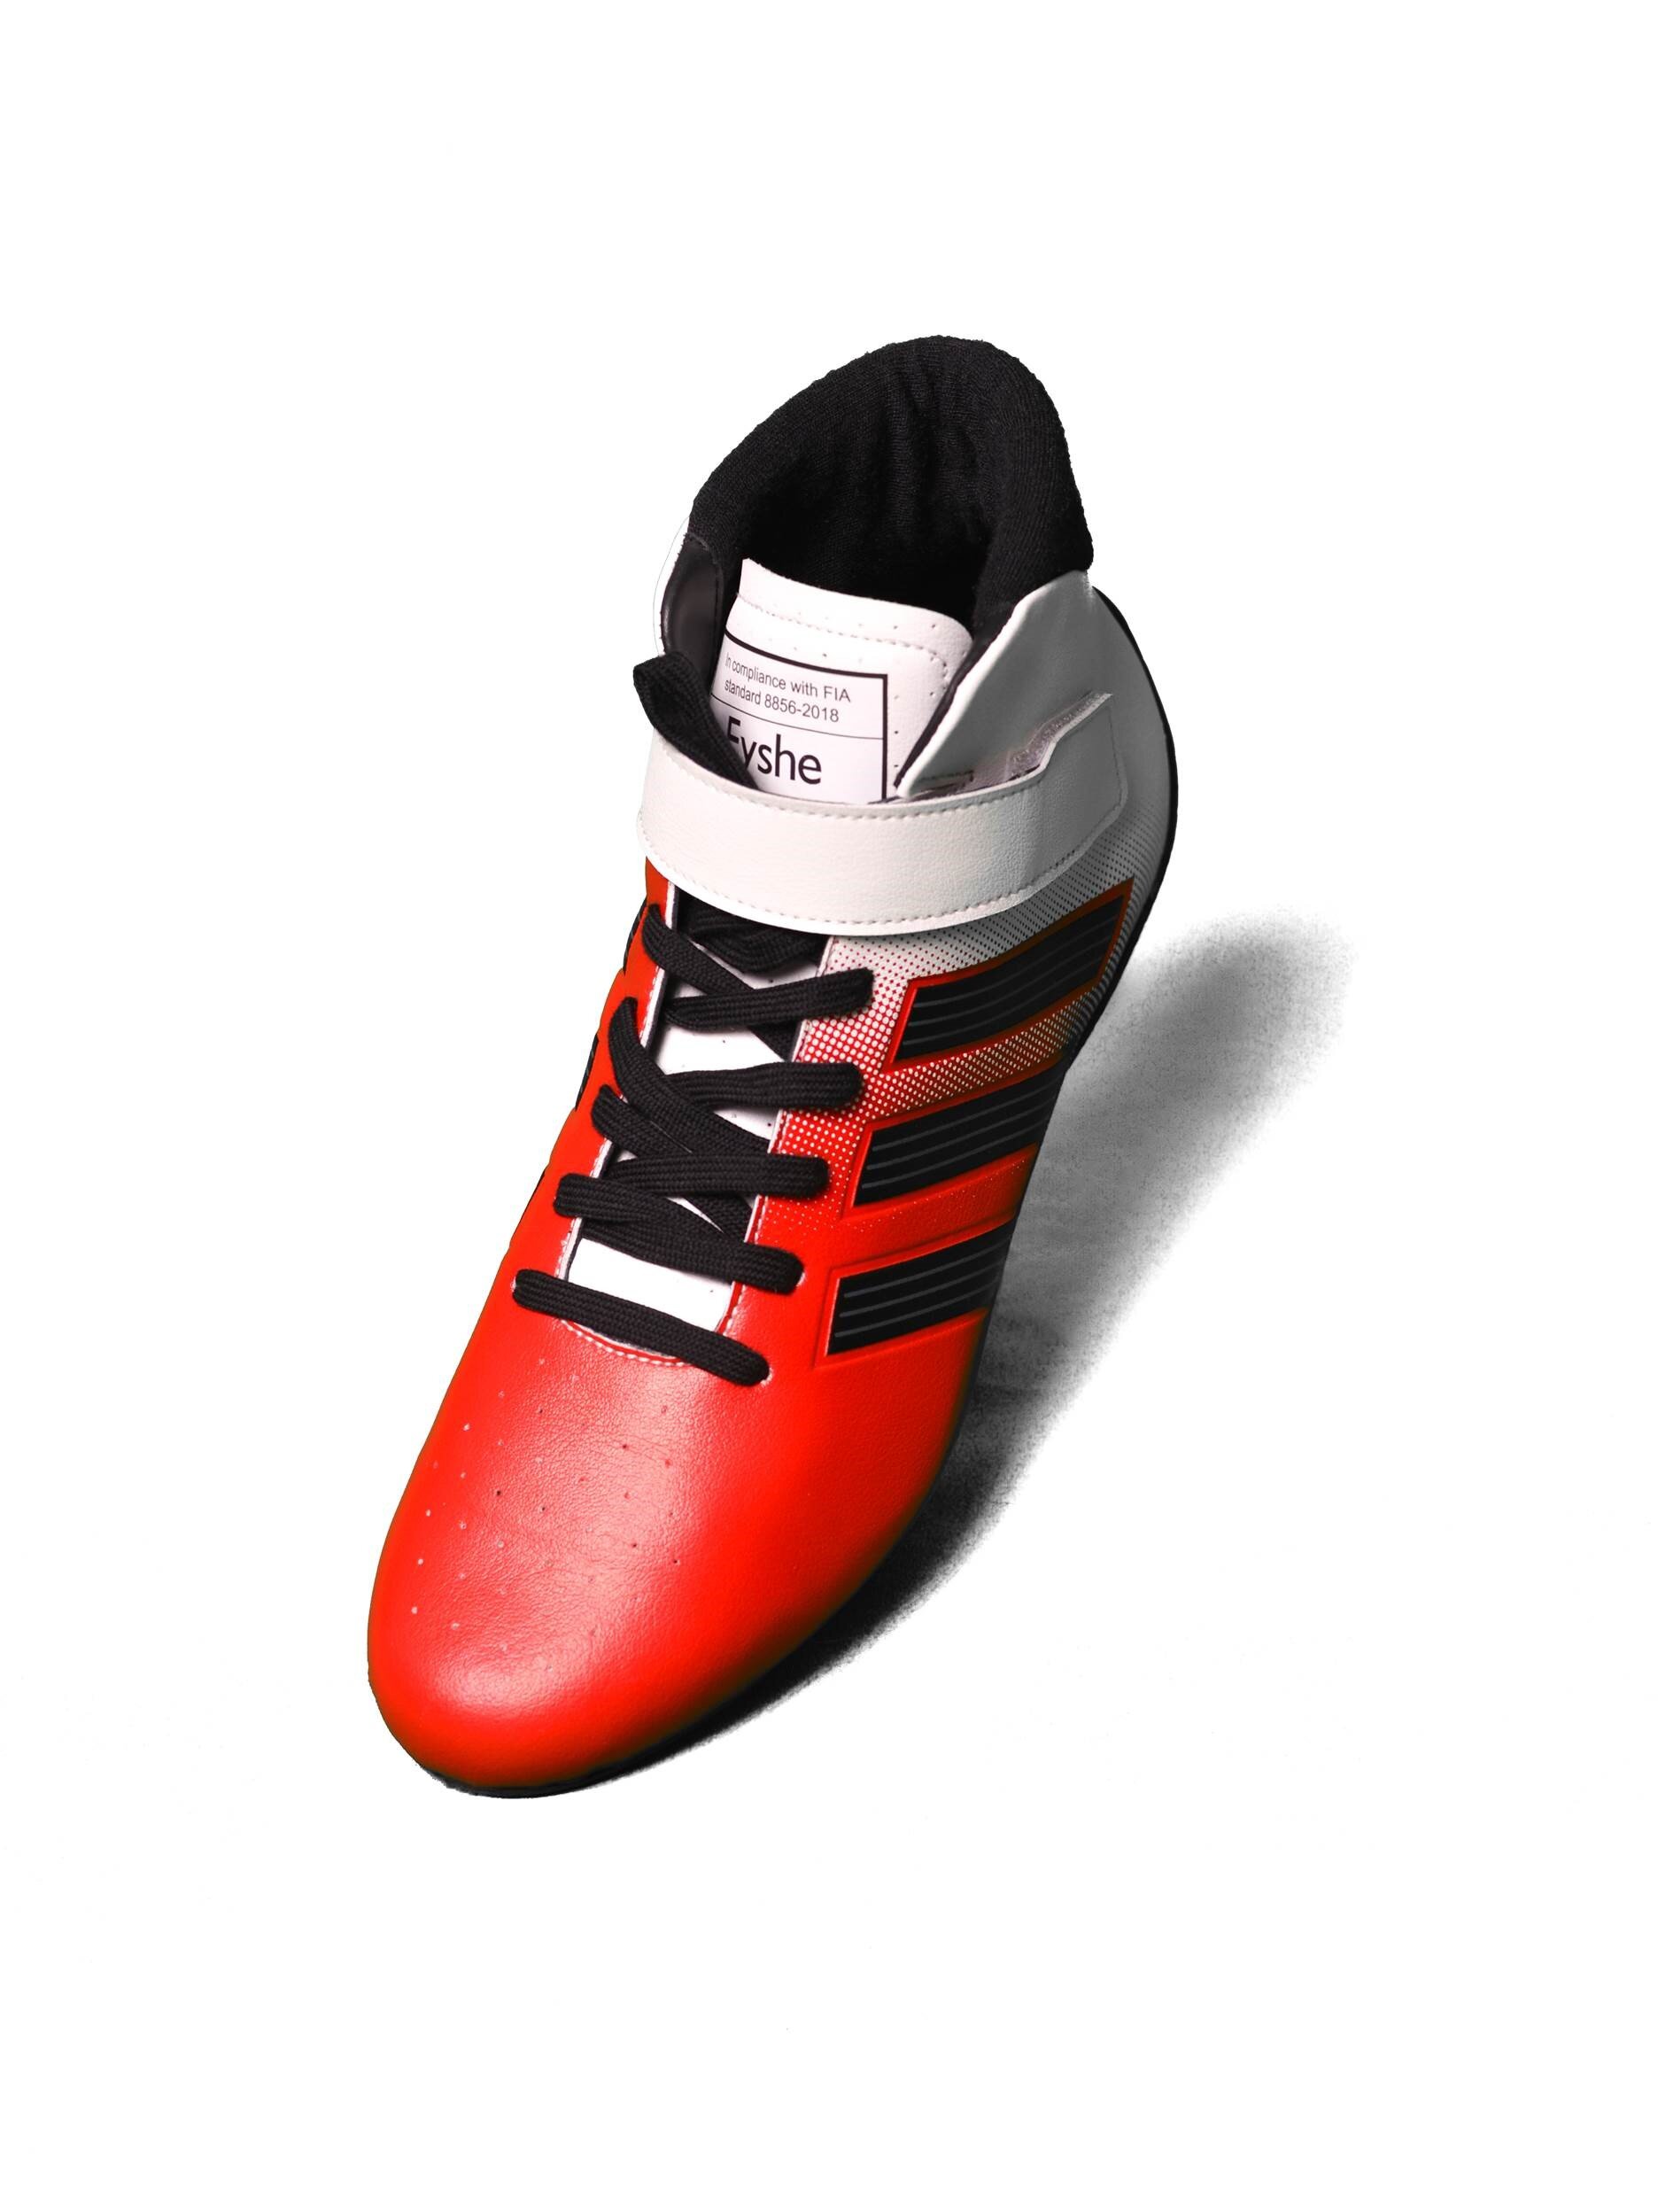 Adidas racing shoe type RS red black 